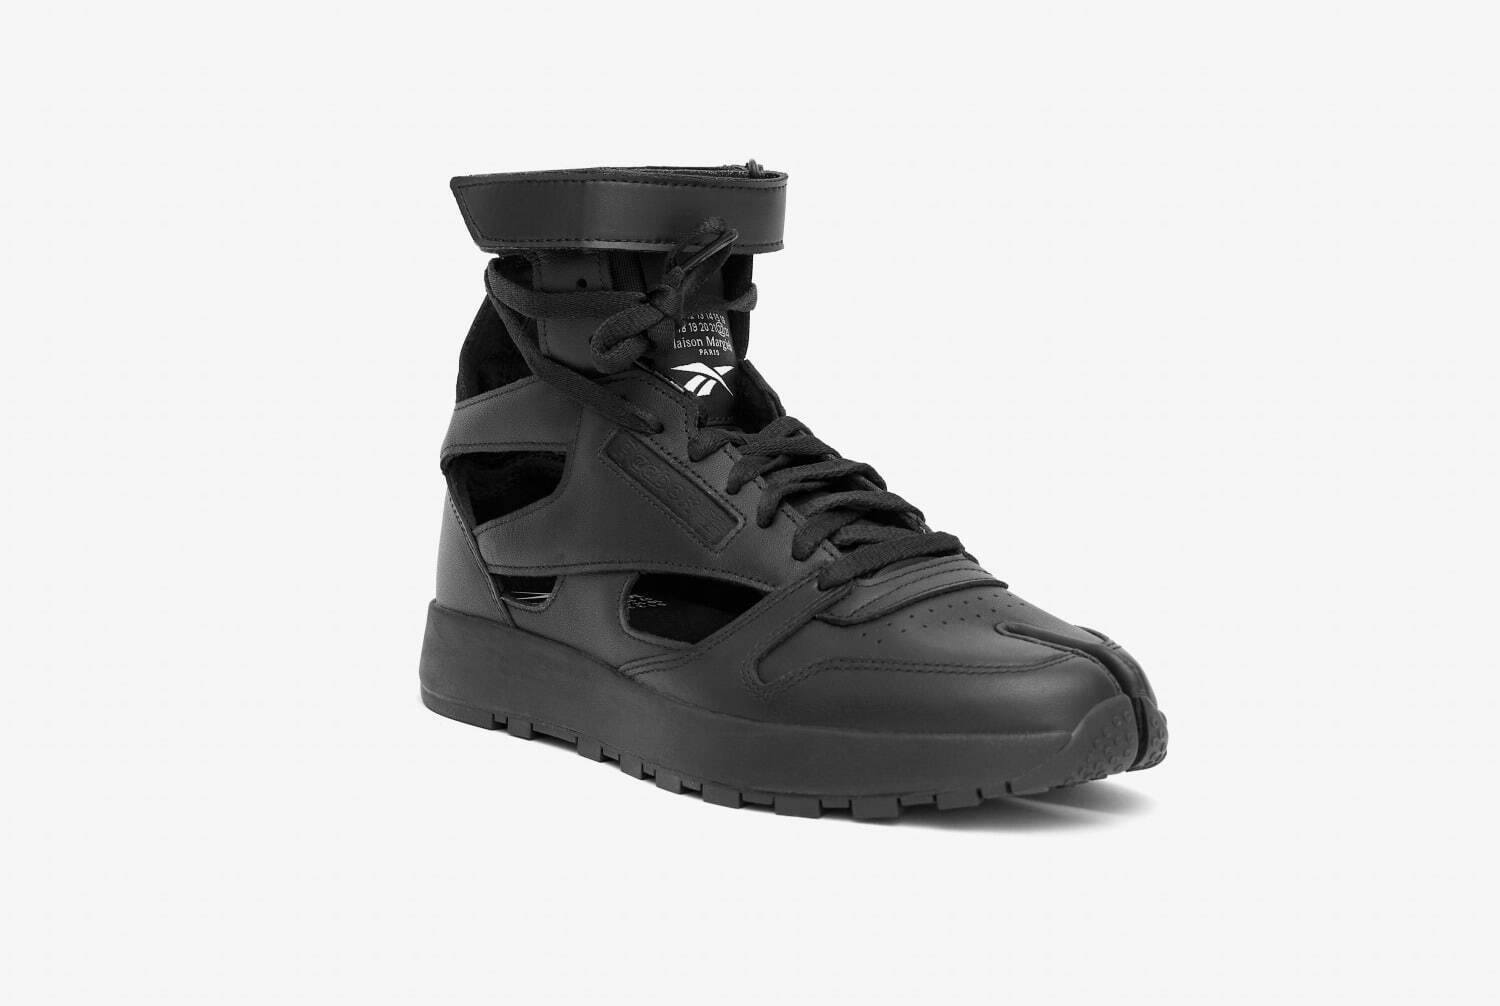 MAISON MARGIELA x REEBOK Tabi High Sneaker 2021